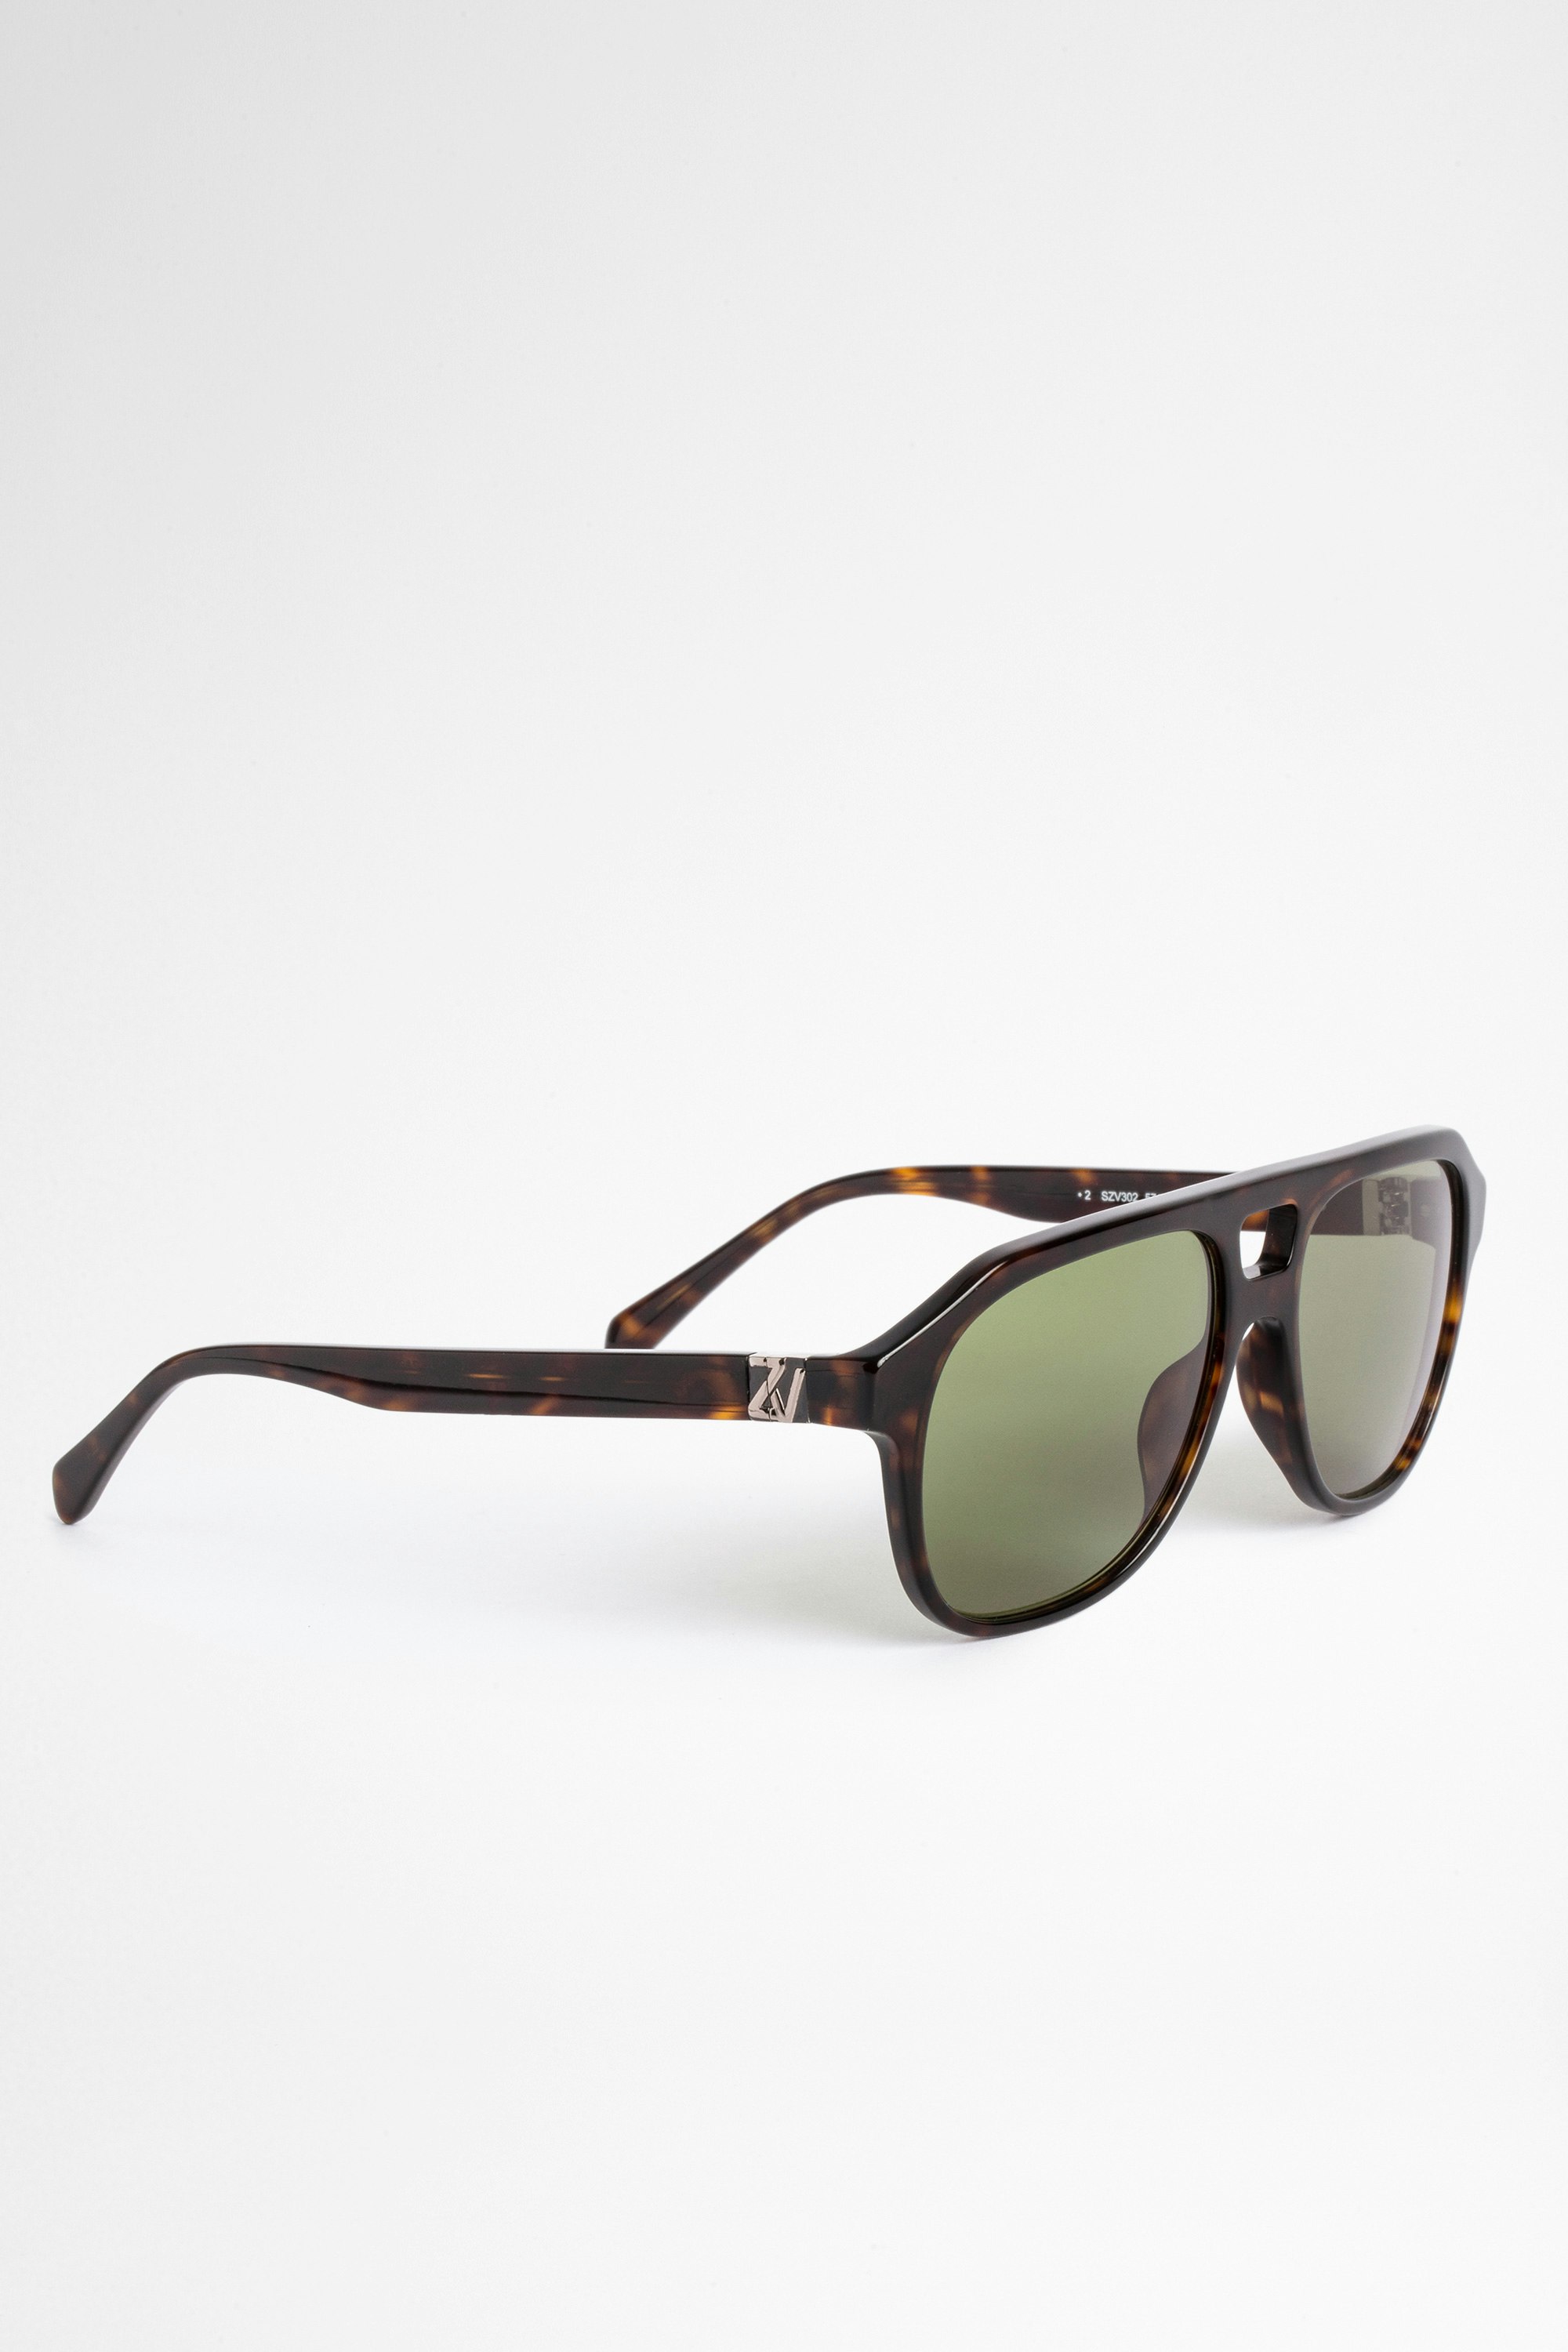 Occhiali Shiny Unisex Zadig&Volatire acetate sunglasses in havana color.